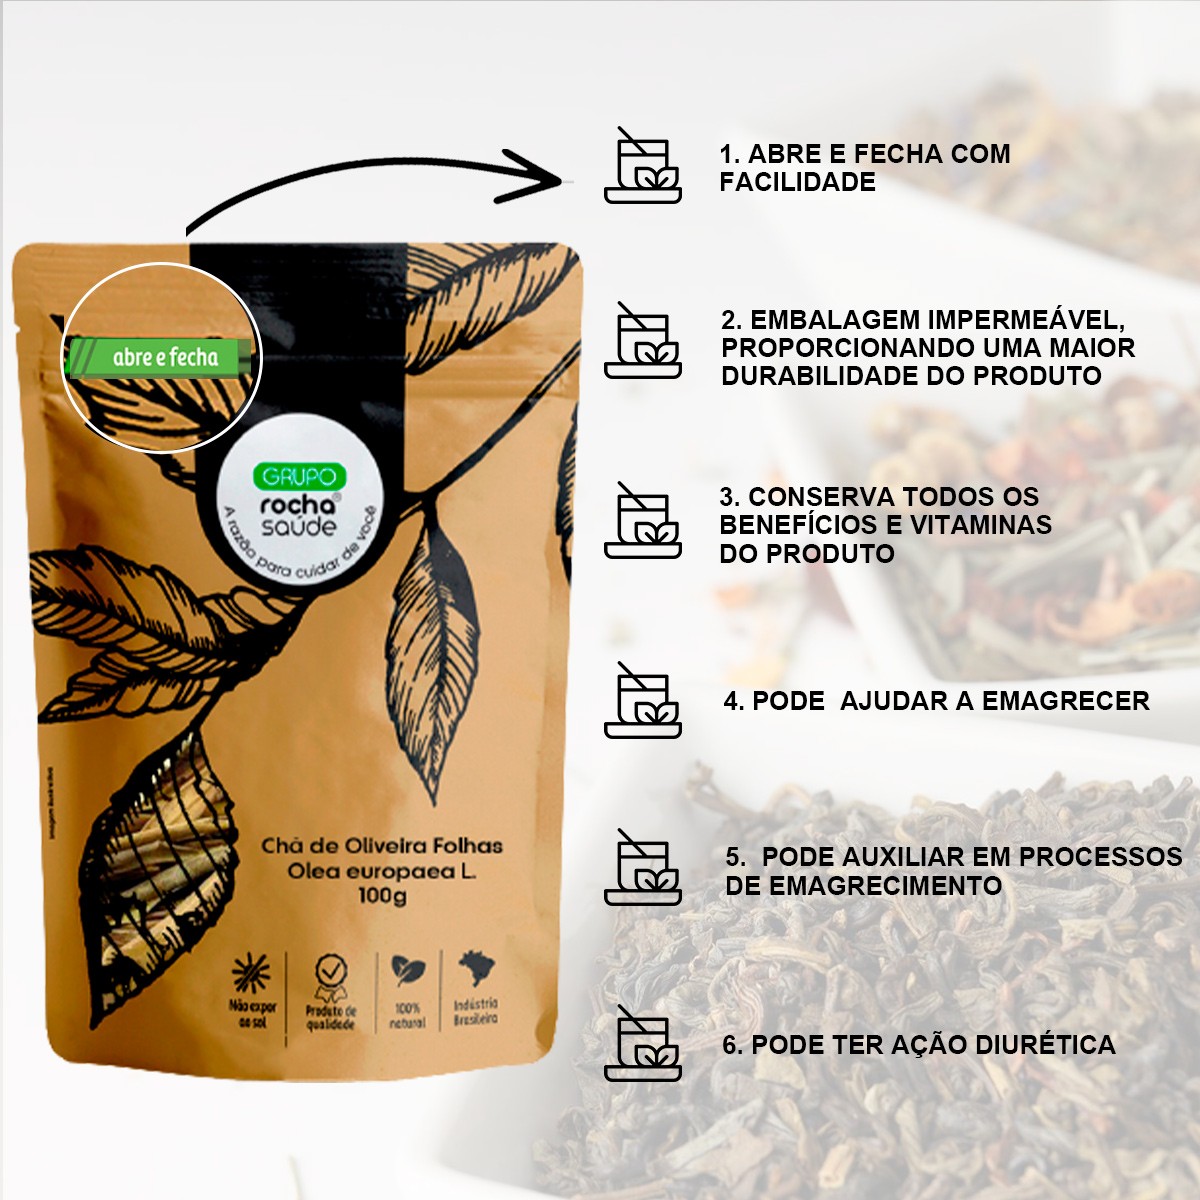 Chá de Oliveira Folhas - Olea europaea L. 100g